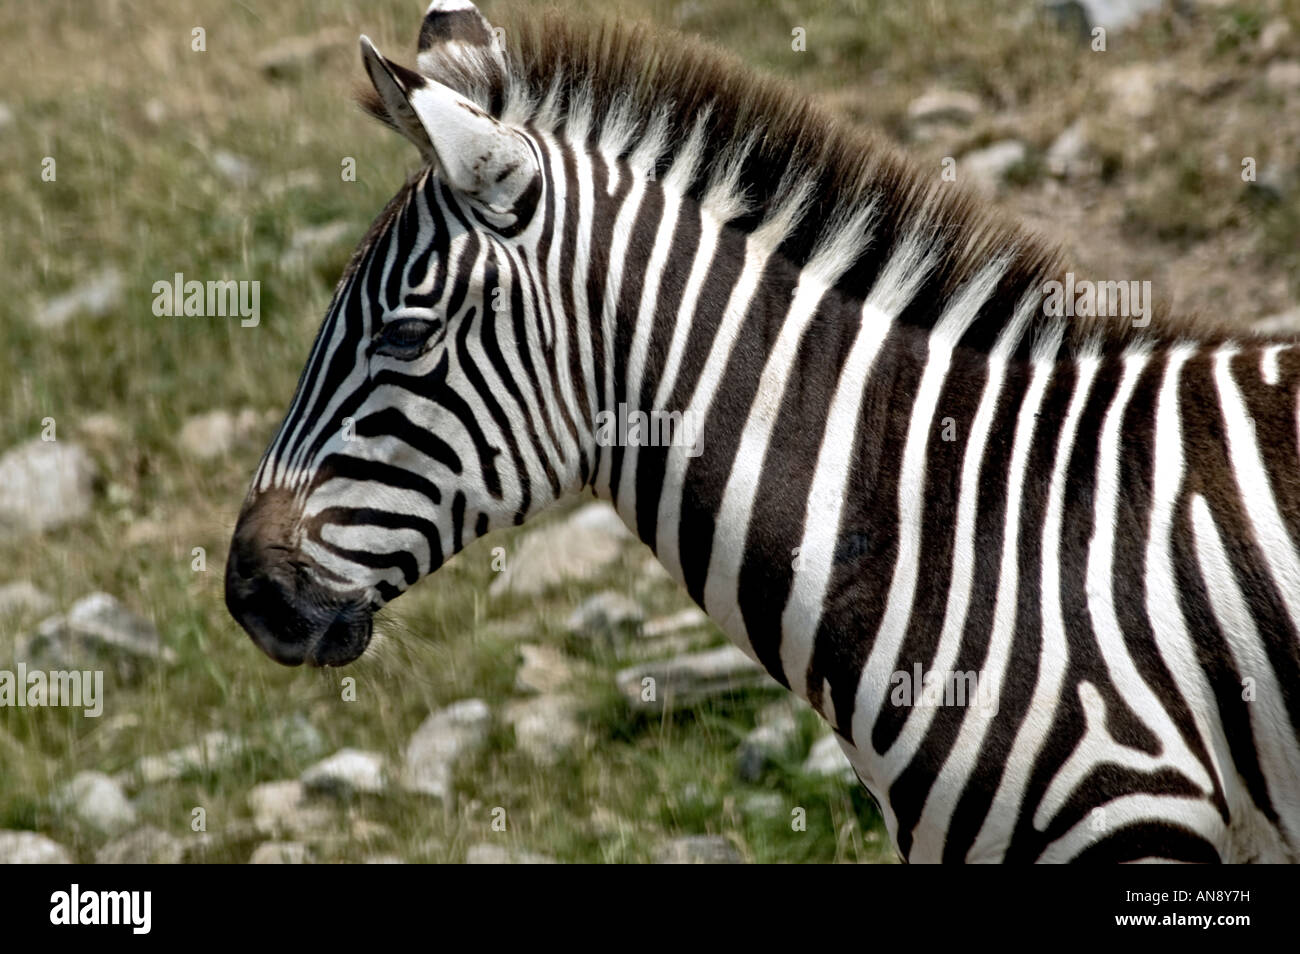 Zebra ears forward -Fotos und -Bildmaterial in hoher Auflösung – Alamy